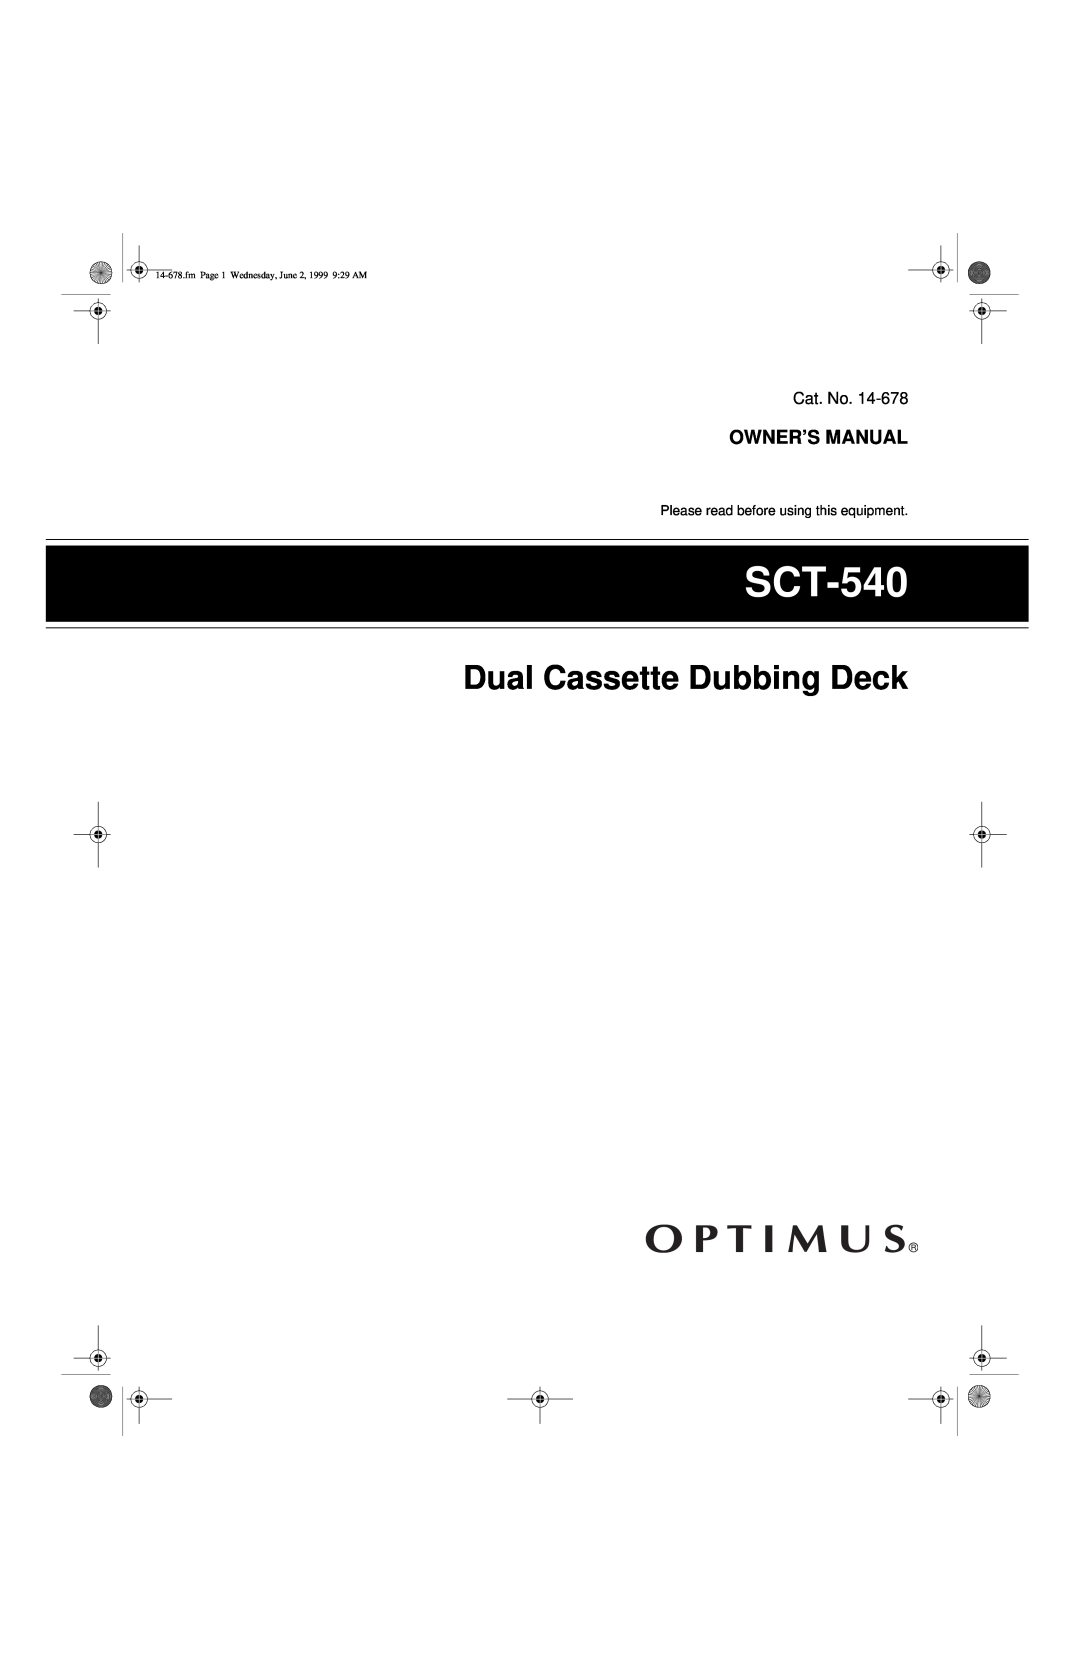 Optimus SCT-540 owner manual Dual Cassette Dubbing Deck, Cat. No, fmPage 1 Wednesday, June 2, 1999 9 29 AM 